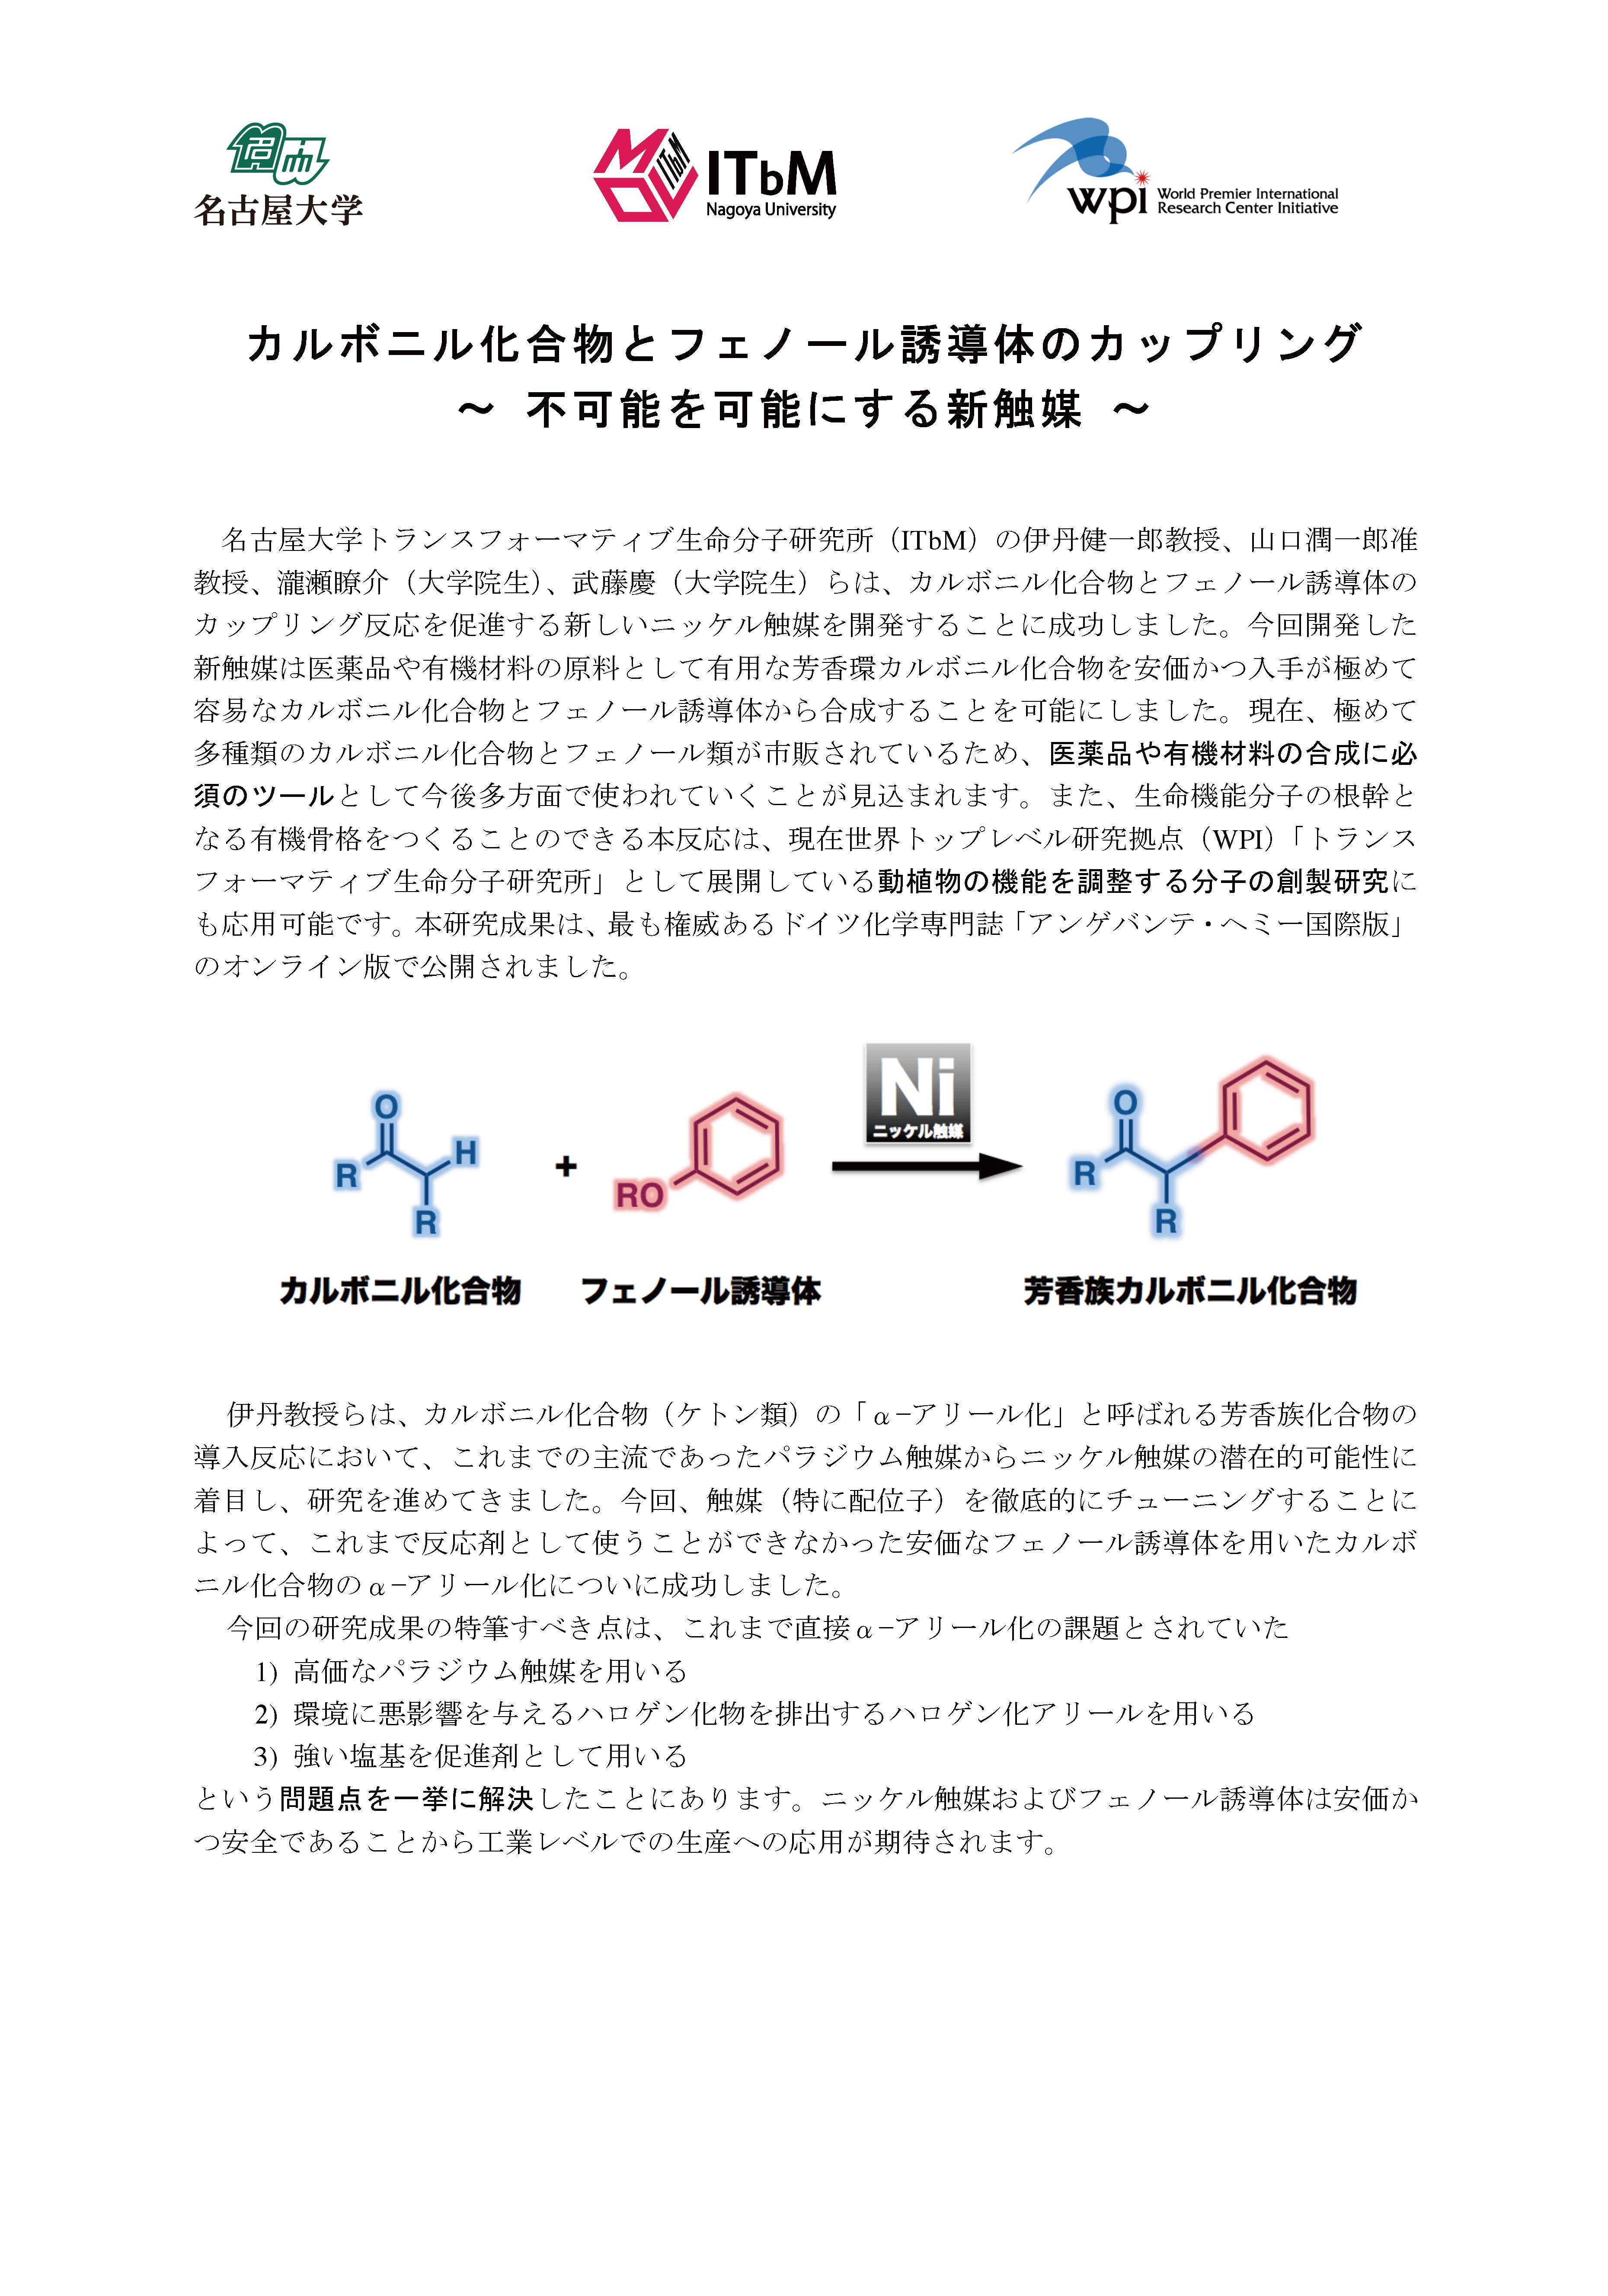 http://www.itbm.nagoya-u.ac.jp/ja_backup/research/20140526_AngewPressRelease_JP.jpg